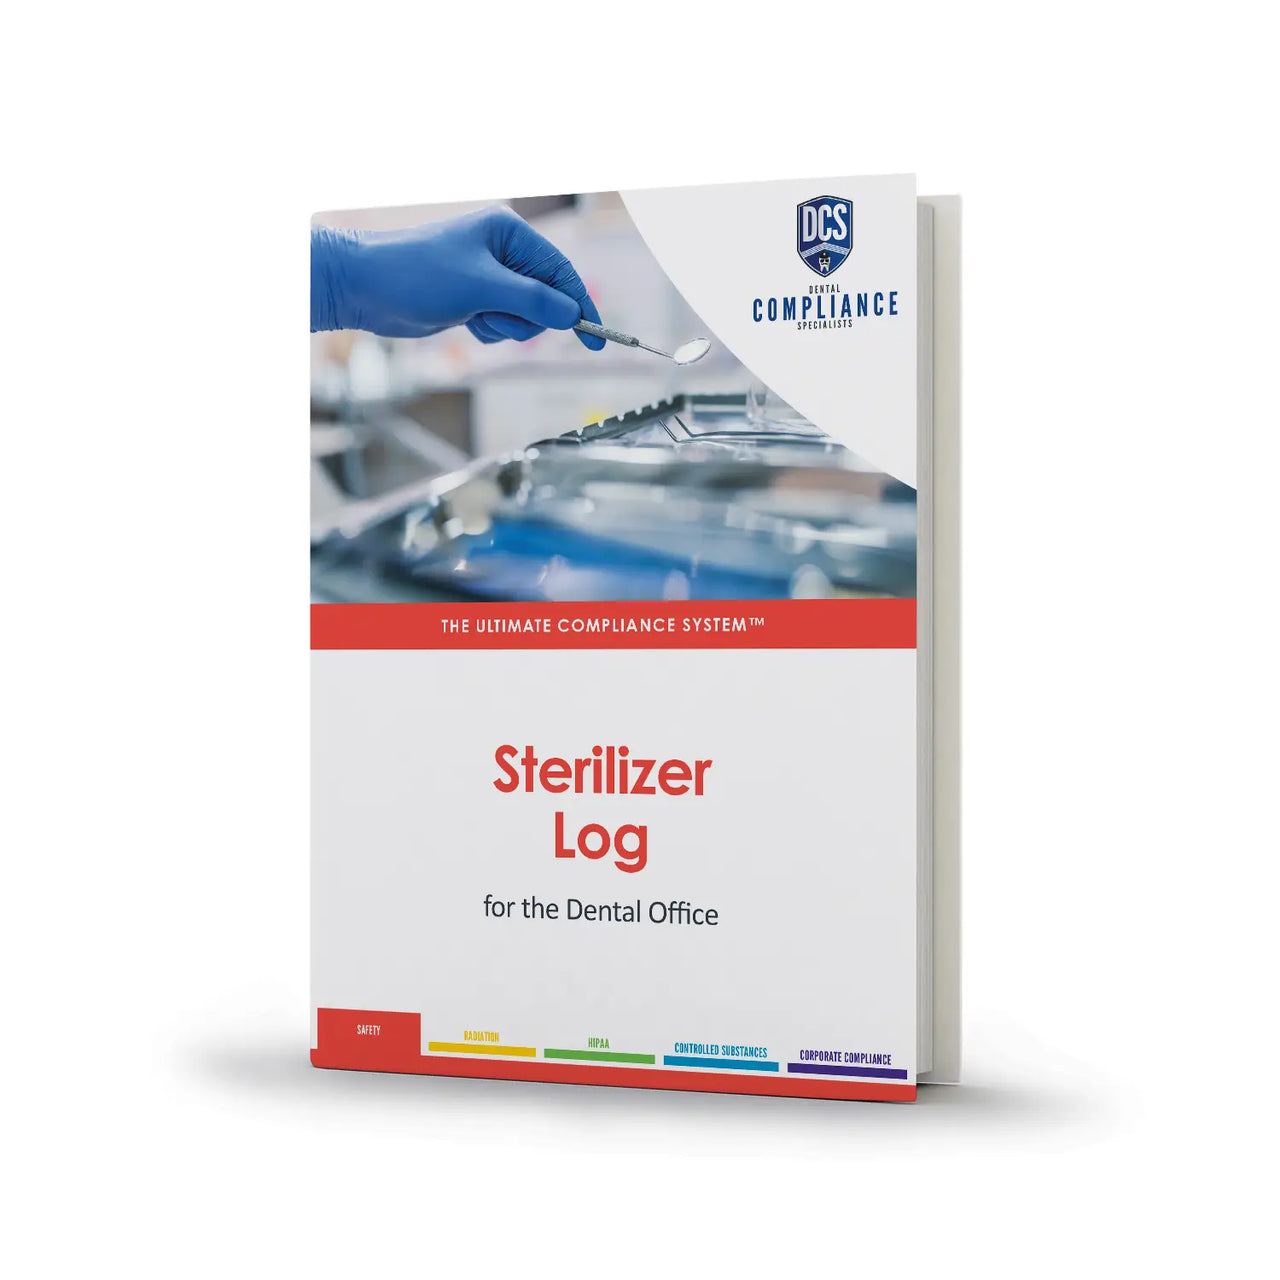 Sterilizer Log for the Dental Office